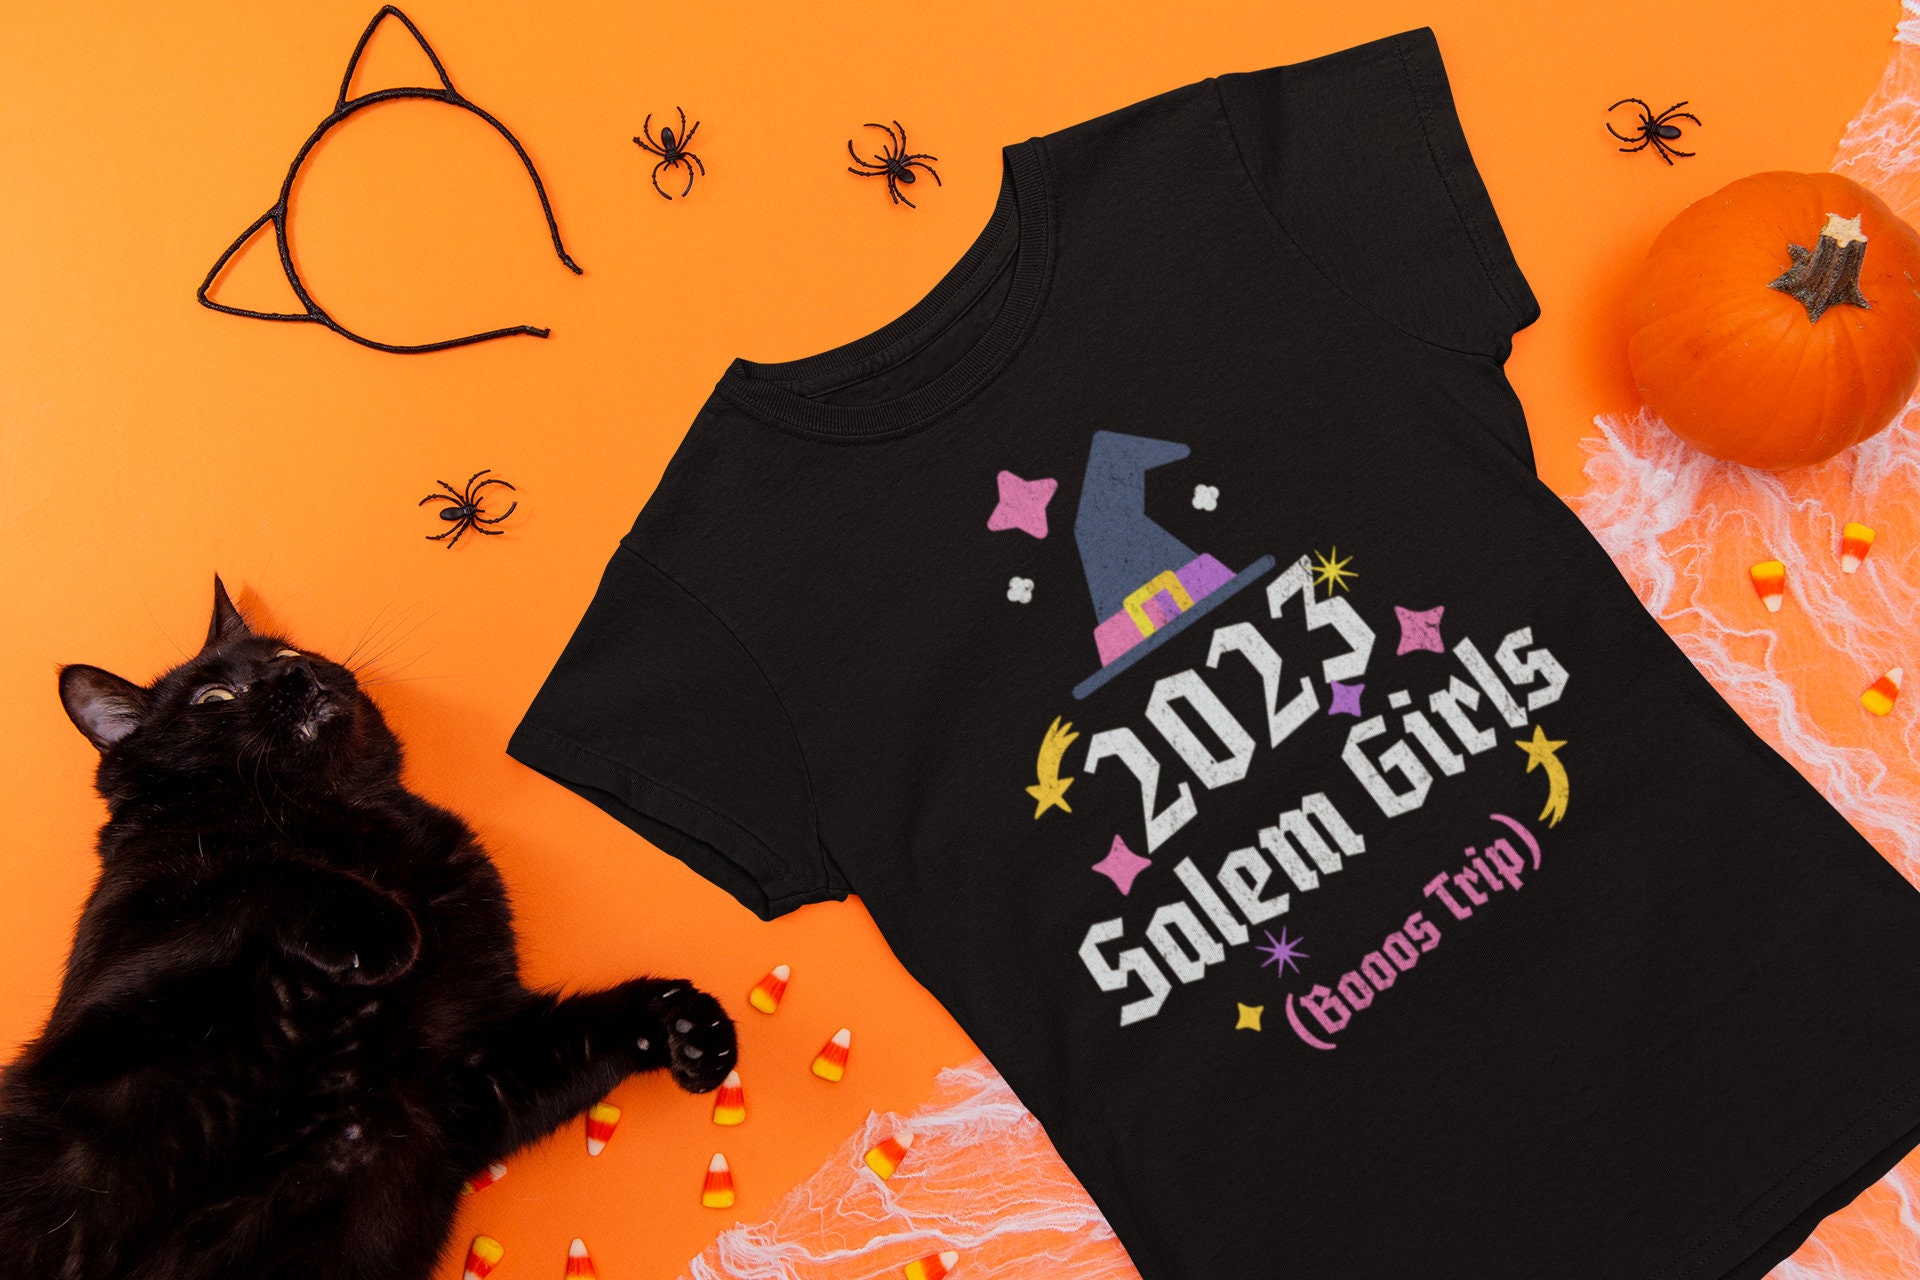 Discover Enchanted Salem Shirt, Spooky Salem T-Shirt, Salem Souvenir Tee, Haunted Salem Halloween Shirt, Autumn Leaves Shirt, Mystical Witch Hat Tee